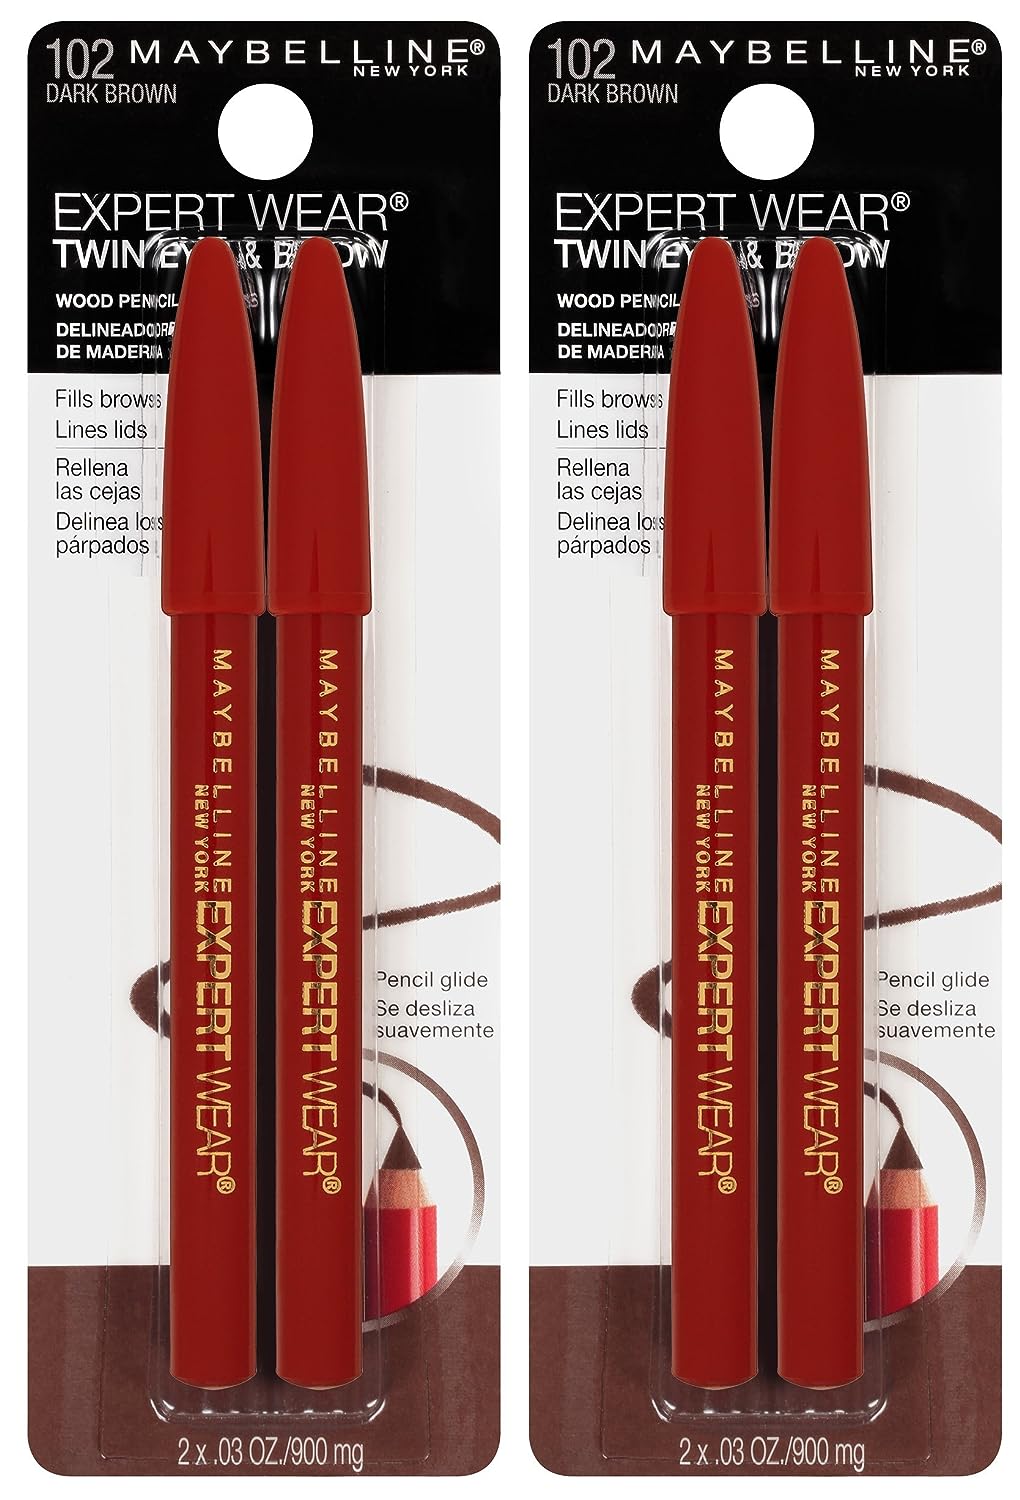 Maybelline New York Expert Wear Twin Brow & Eye Pencils Makeup, Dark Brown, 2 Count (Pack of 2)